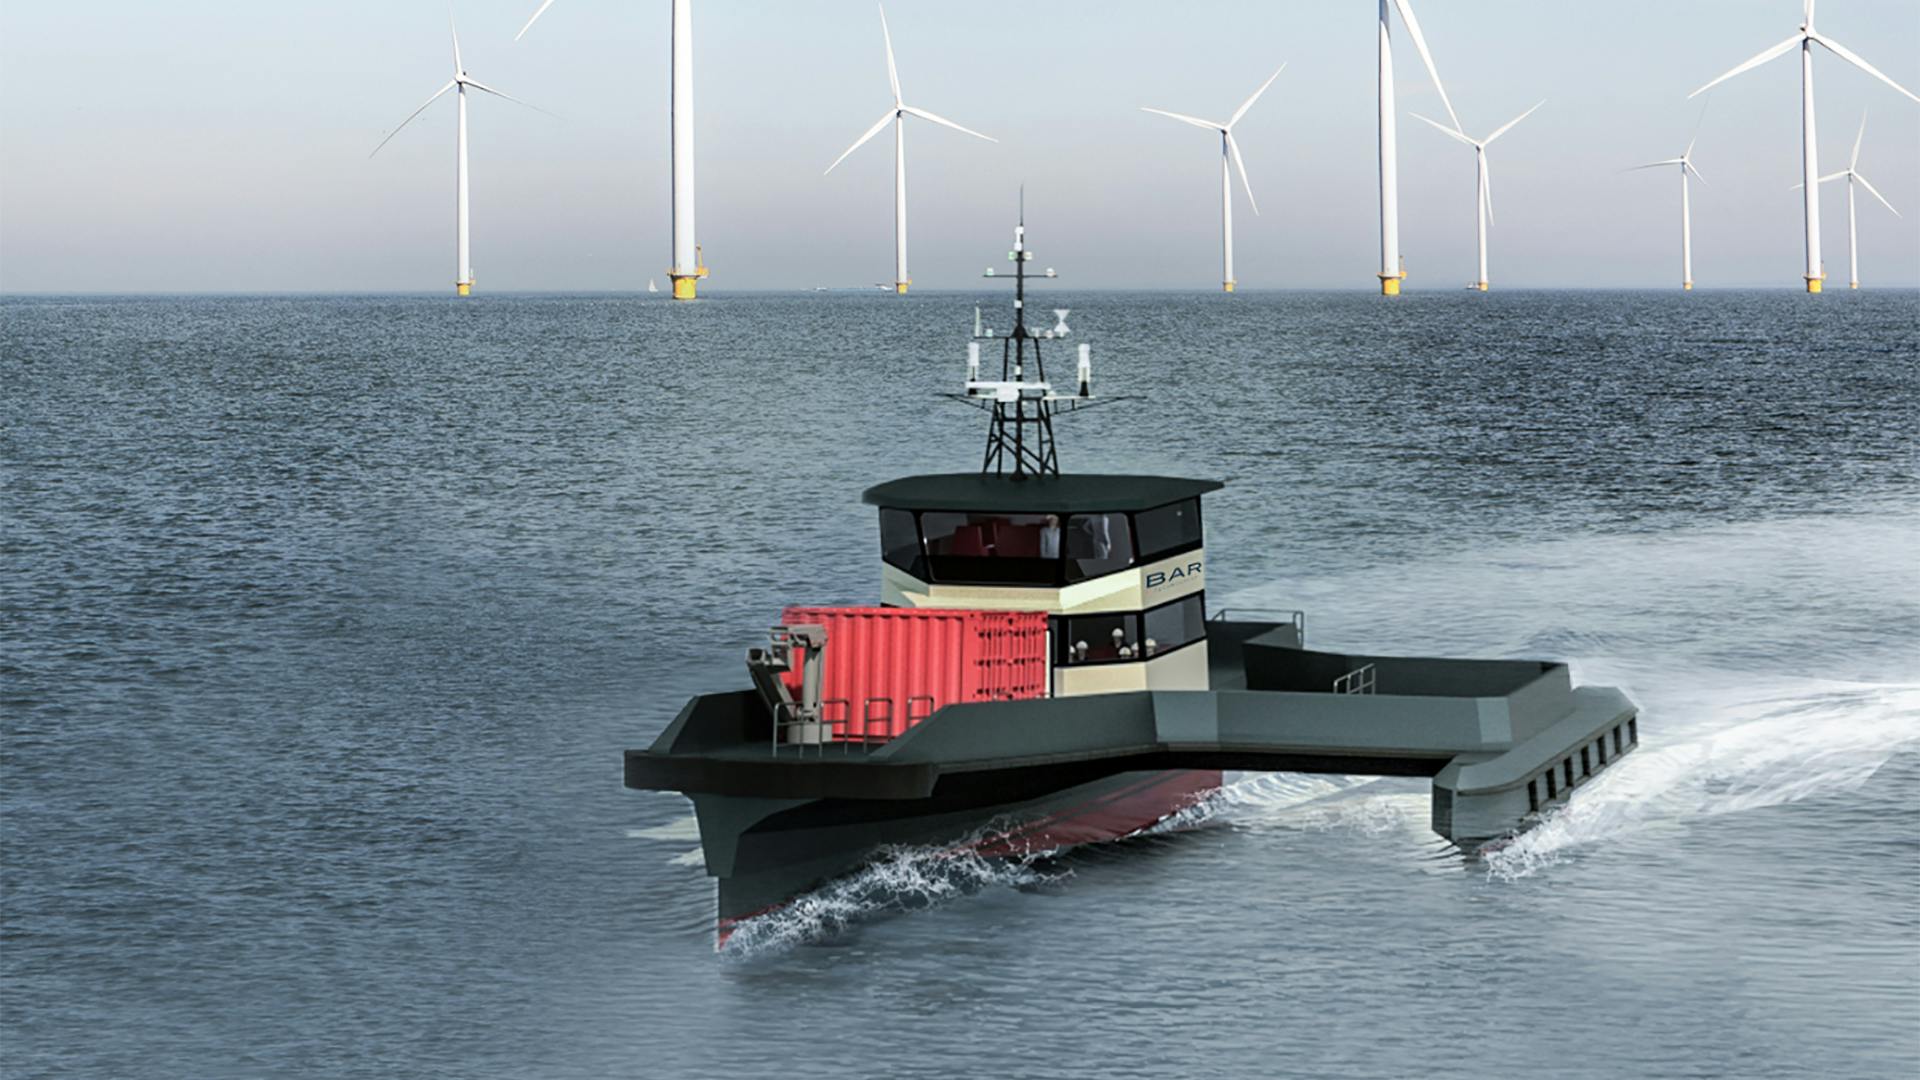 BAR Technologies: Maritime innovation "over the sea"